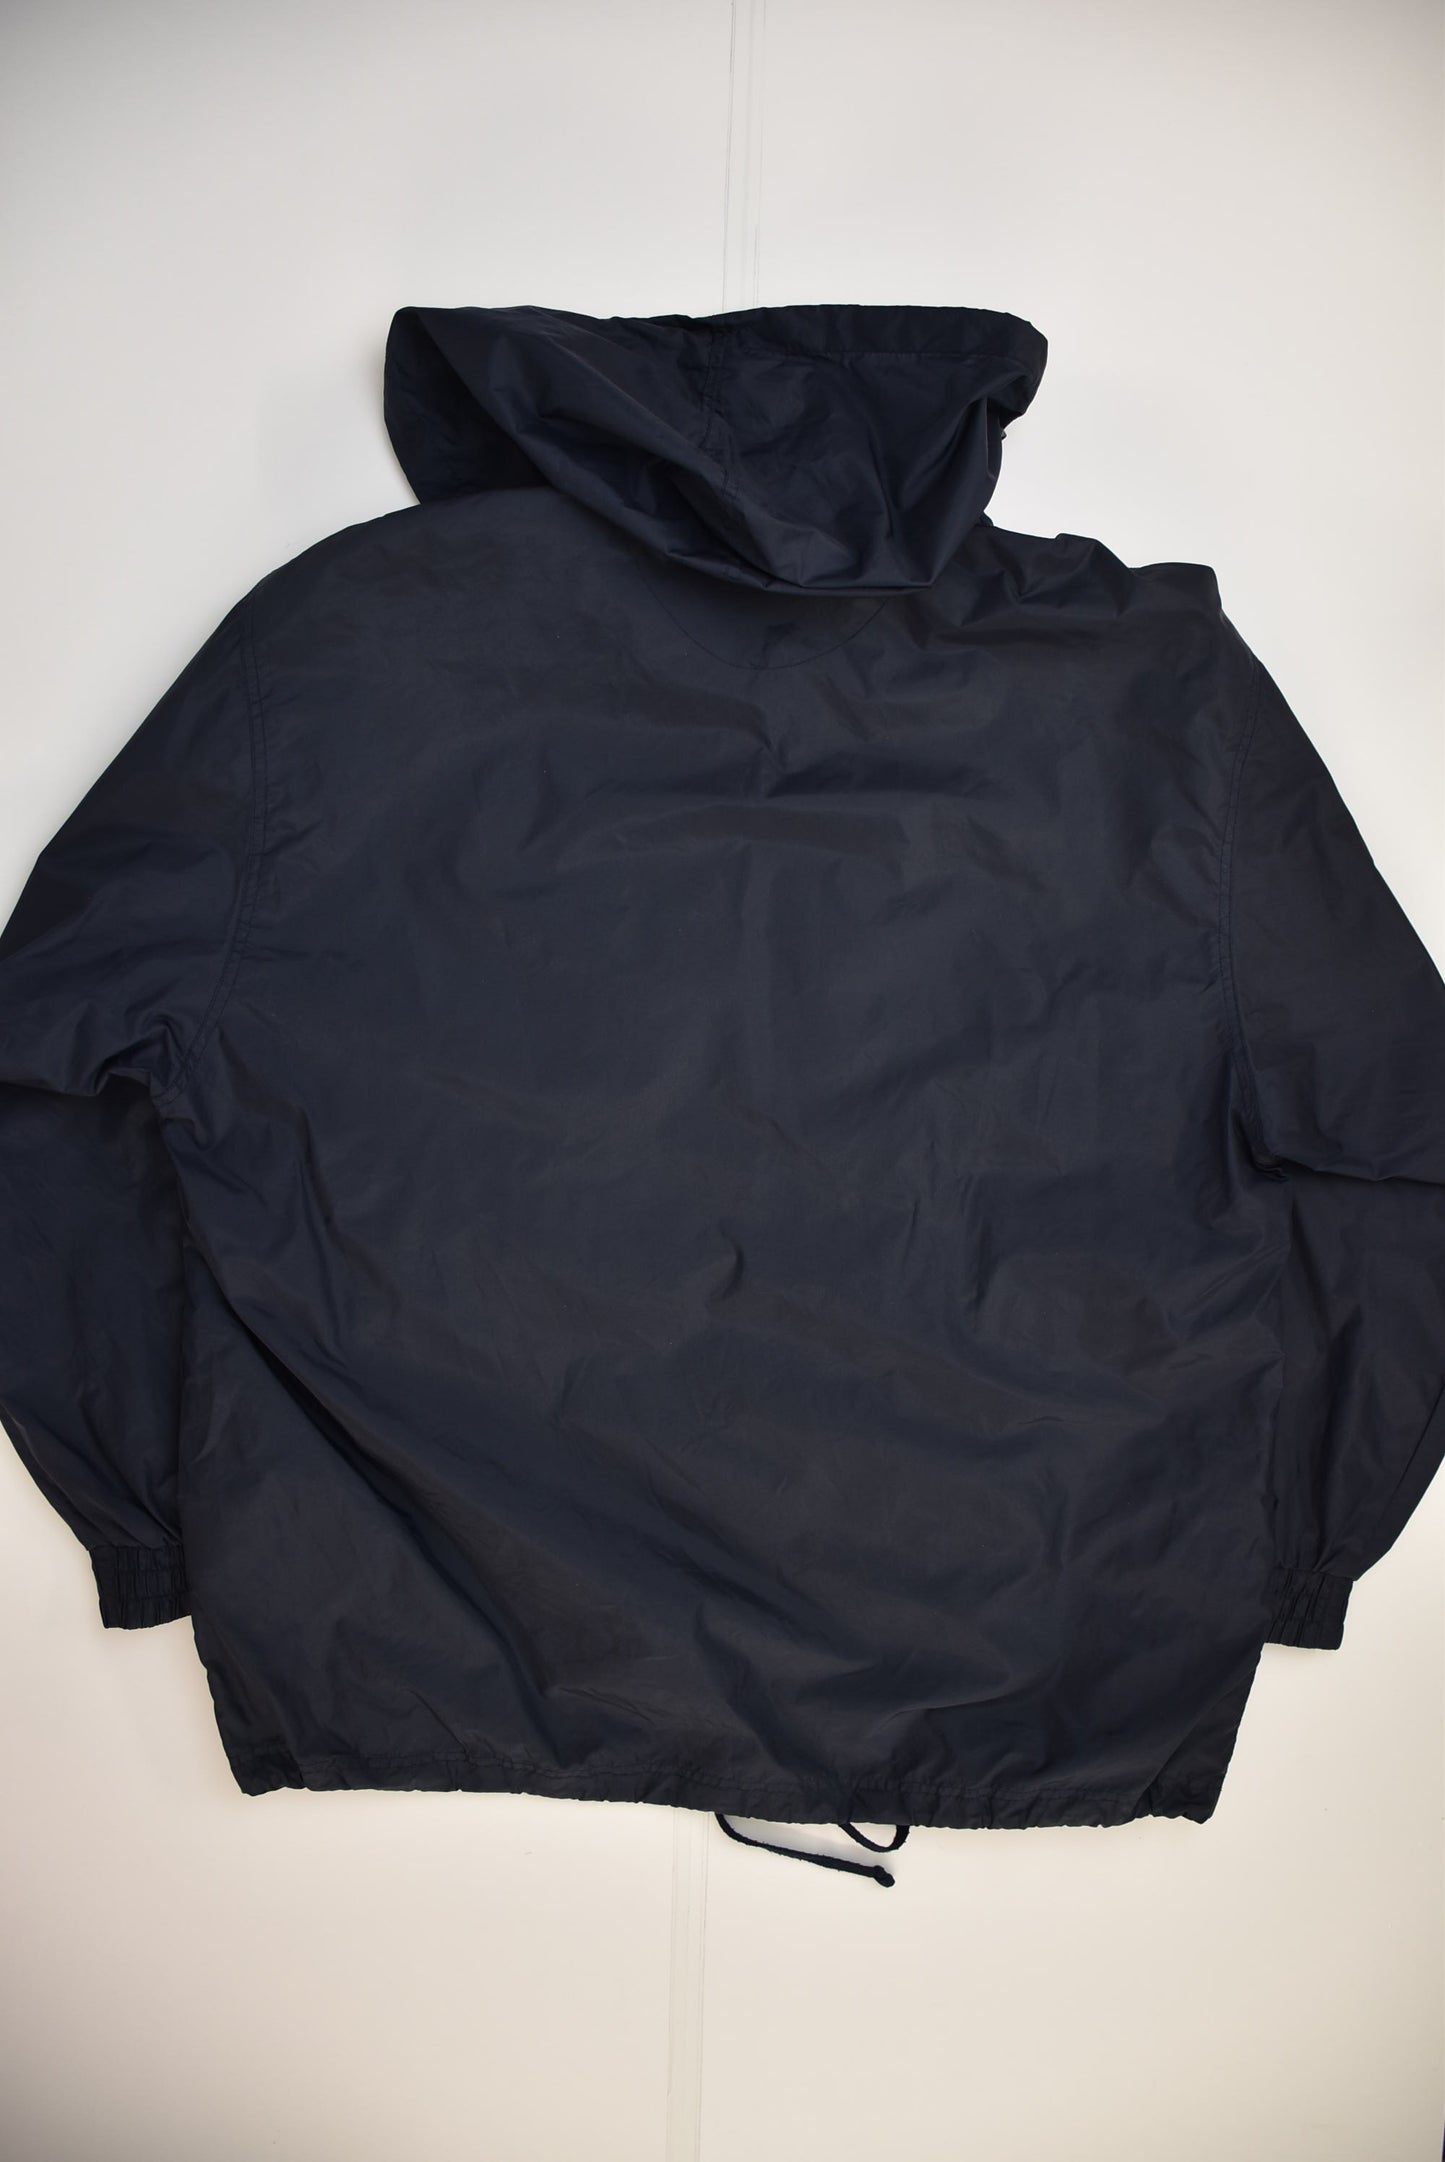 Reebok Pullover Jacket (M)